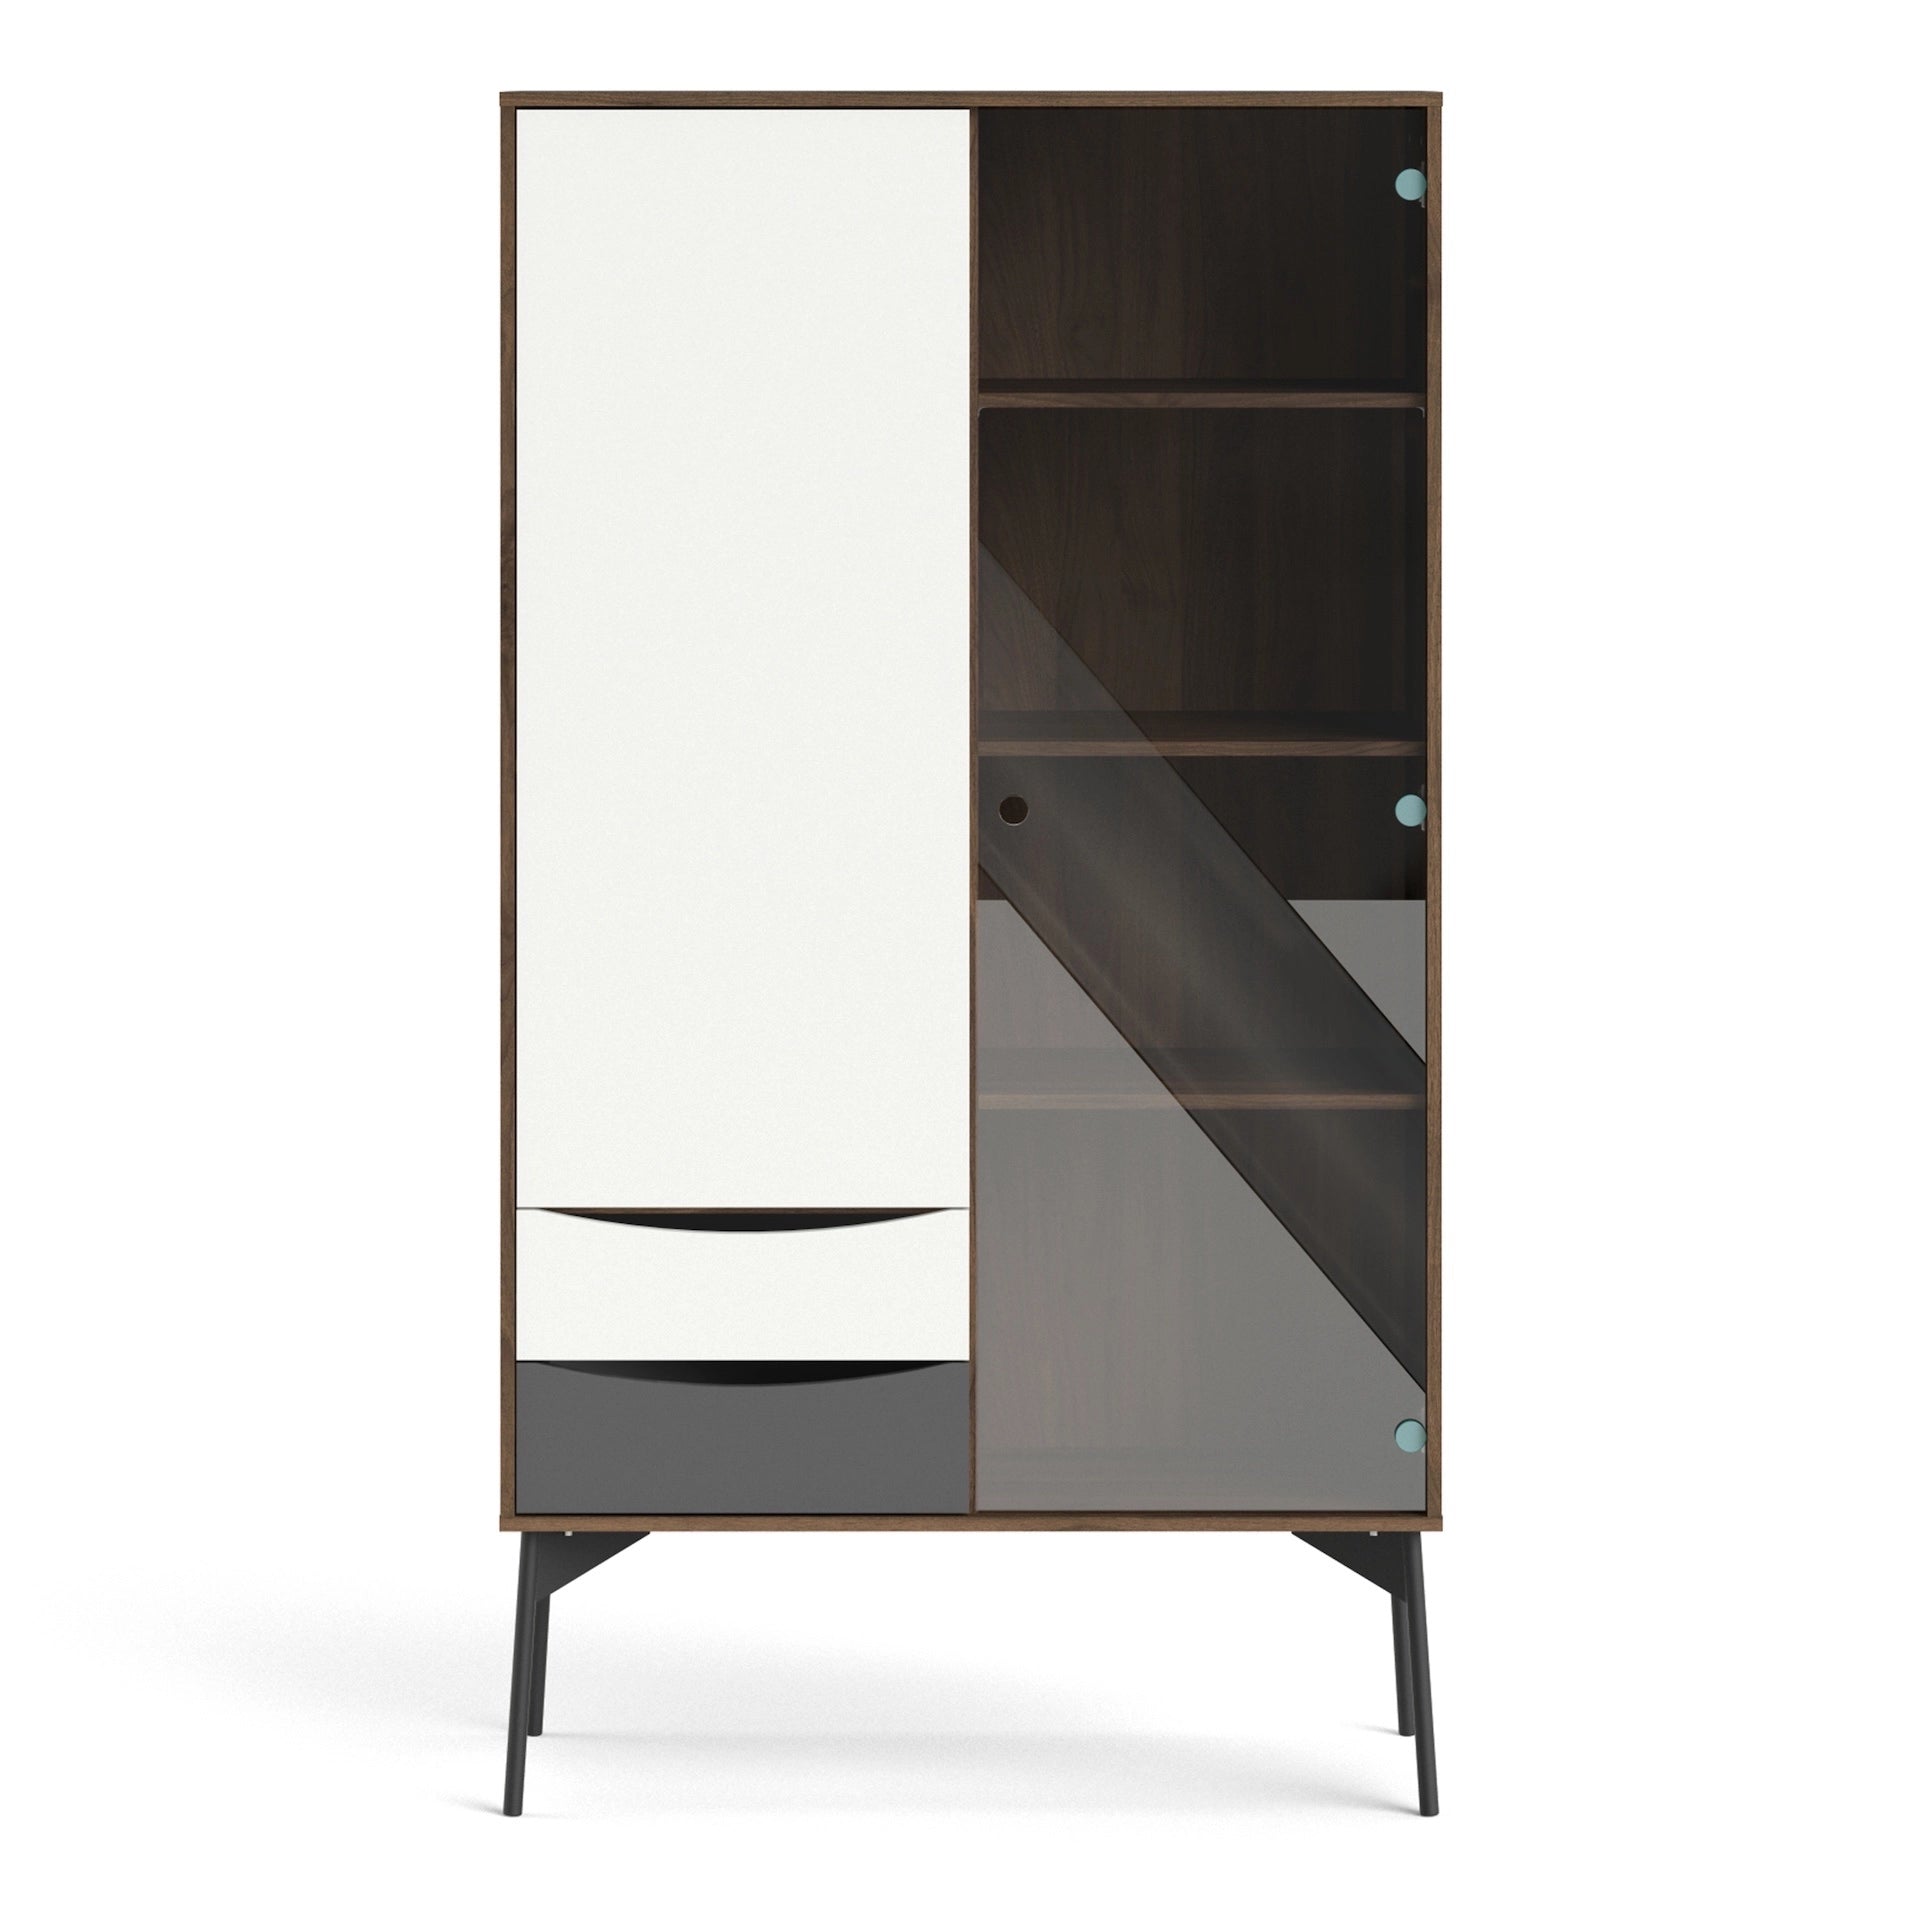 Furniture To Go Fur China Cabinet 1 Door + 1 Glass Door + 2 Drawers in Grey, White & Walnut